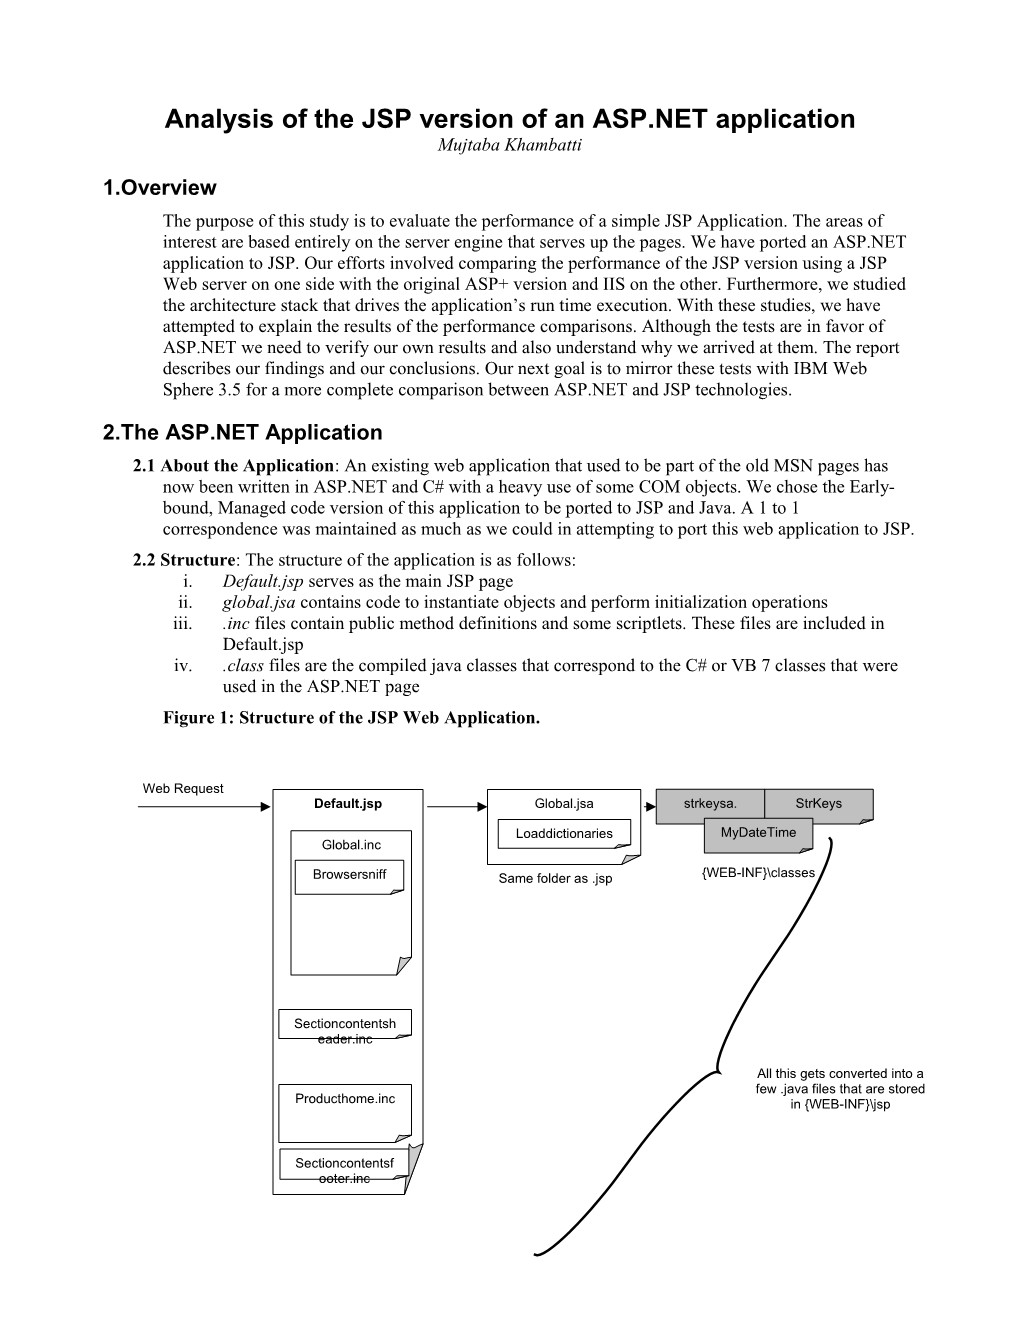 Analysis of the JSP Version of an ASP